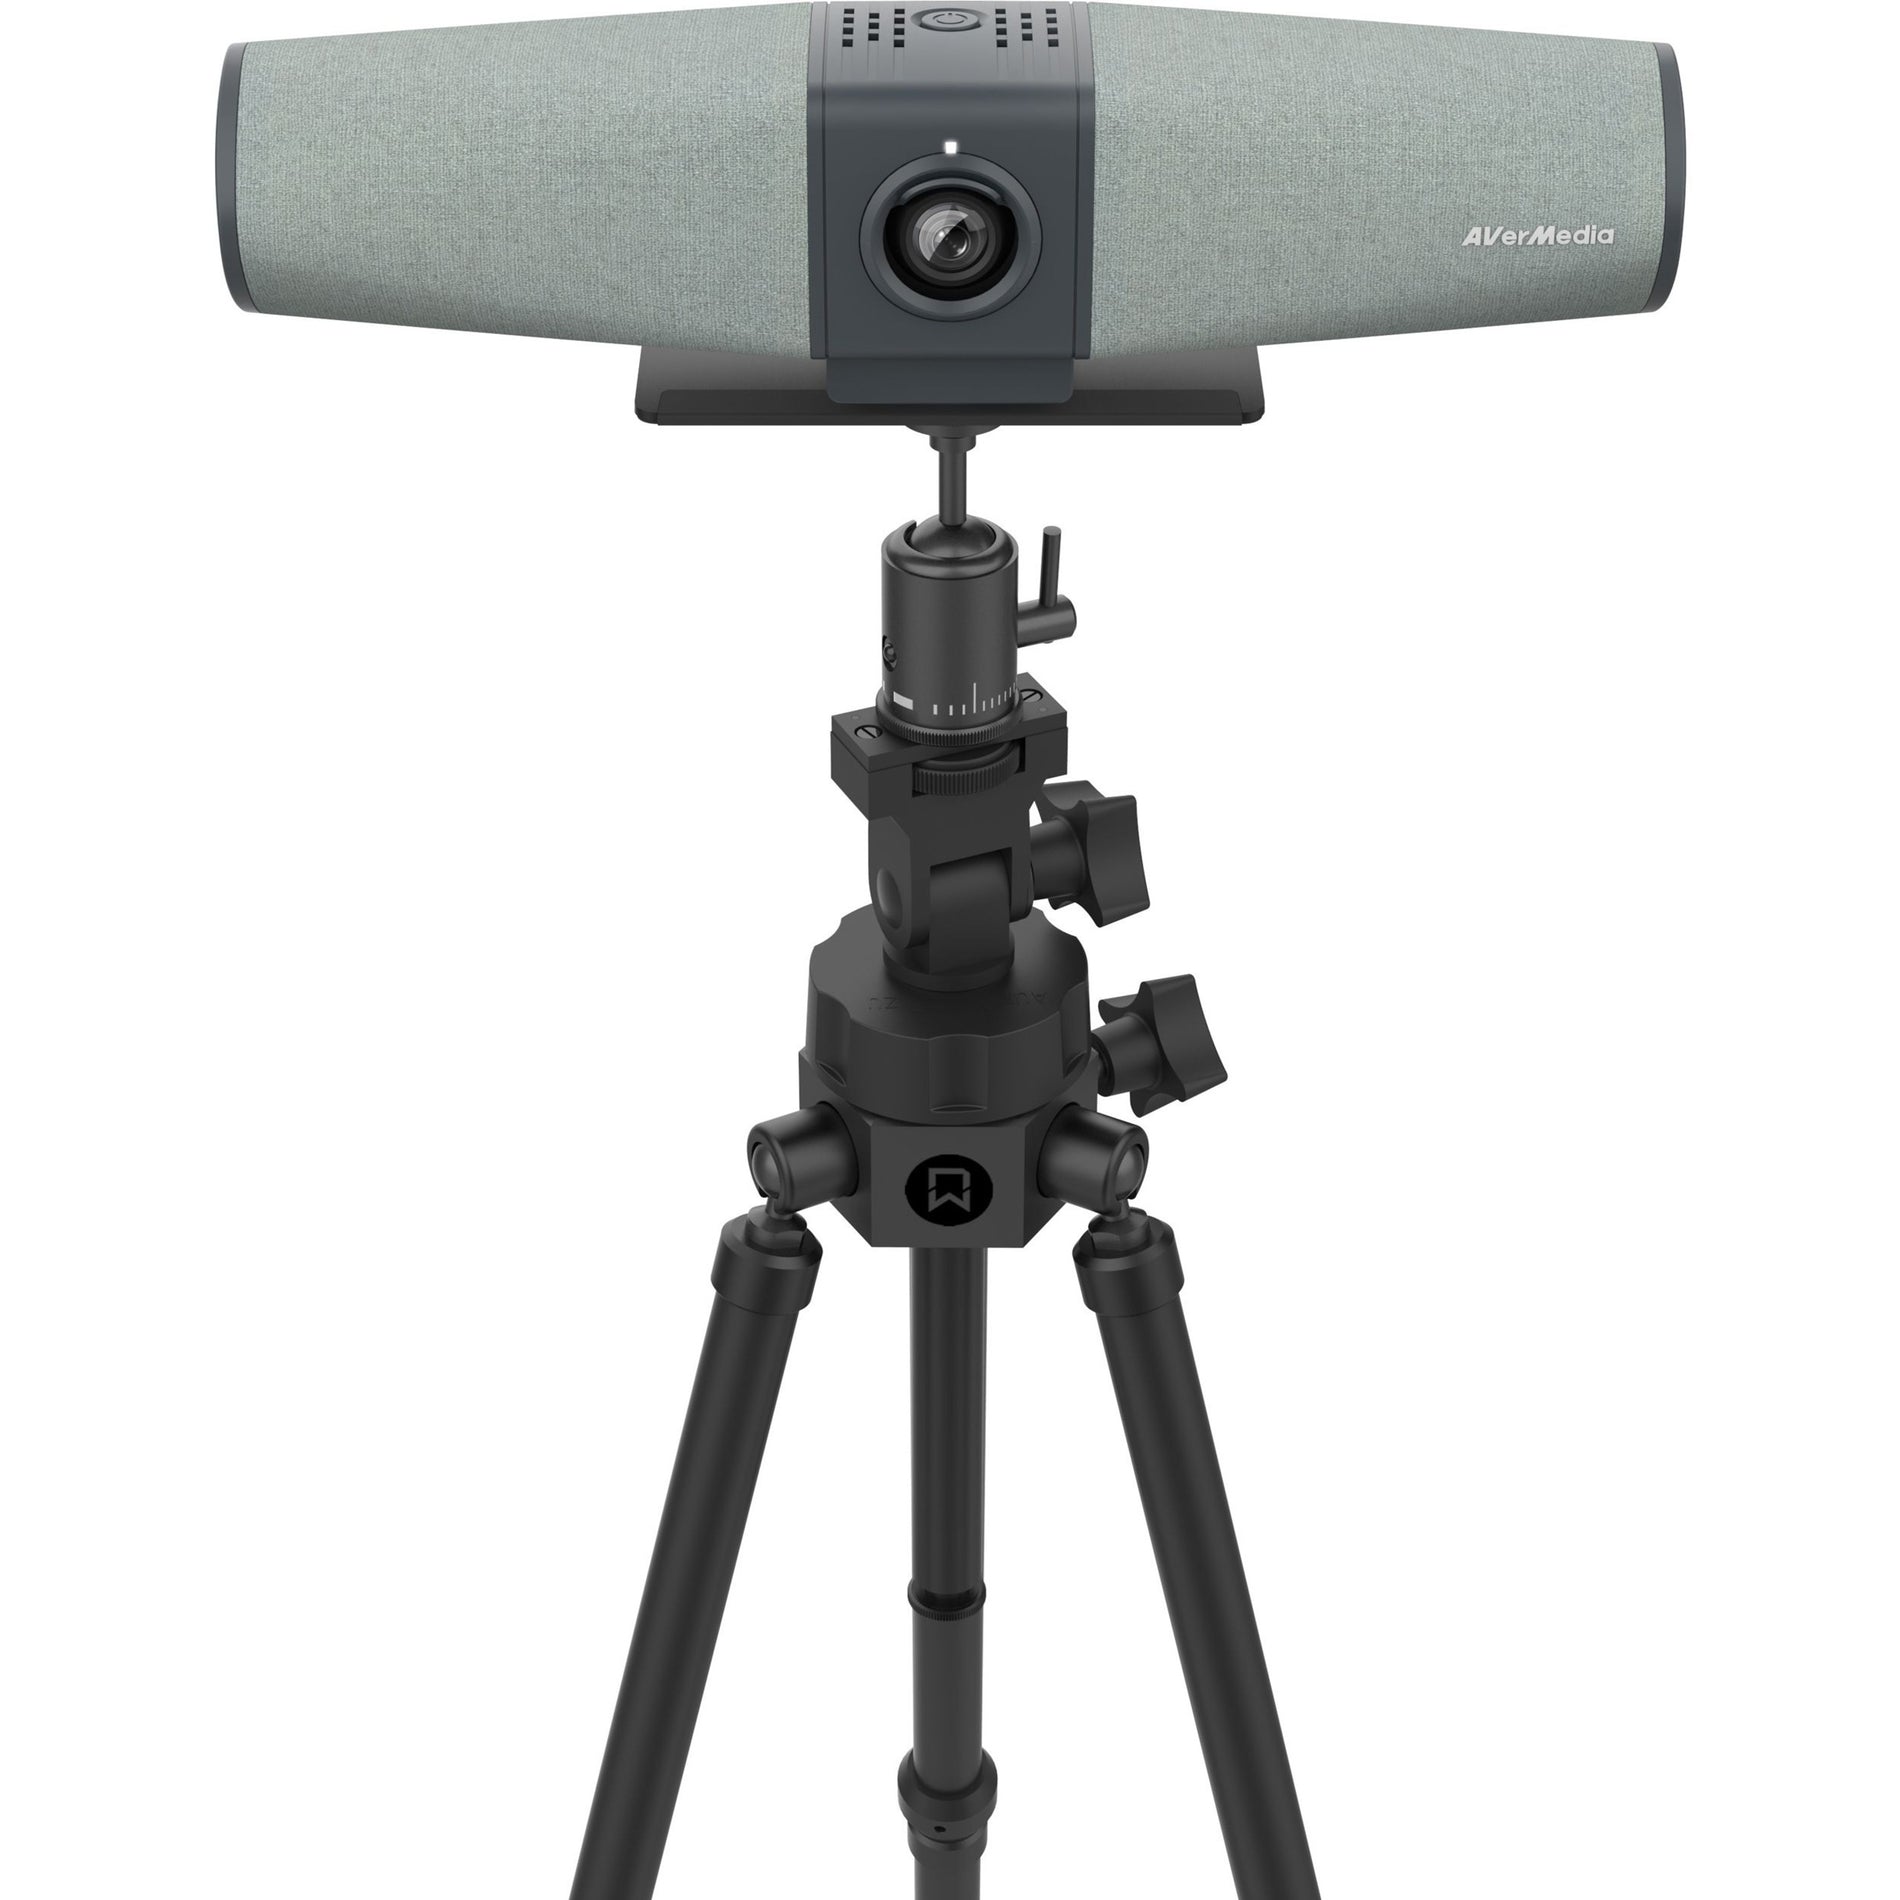 AVerMedia PA511D Mingle Bar Webcam, 4K Ultra HD, Auto-focus, Windows 10 Compatible